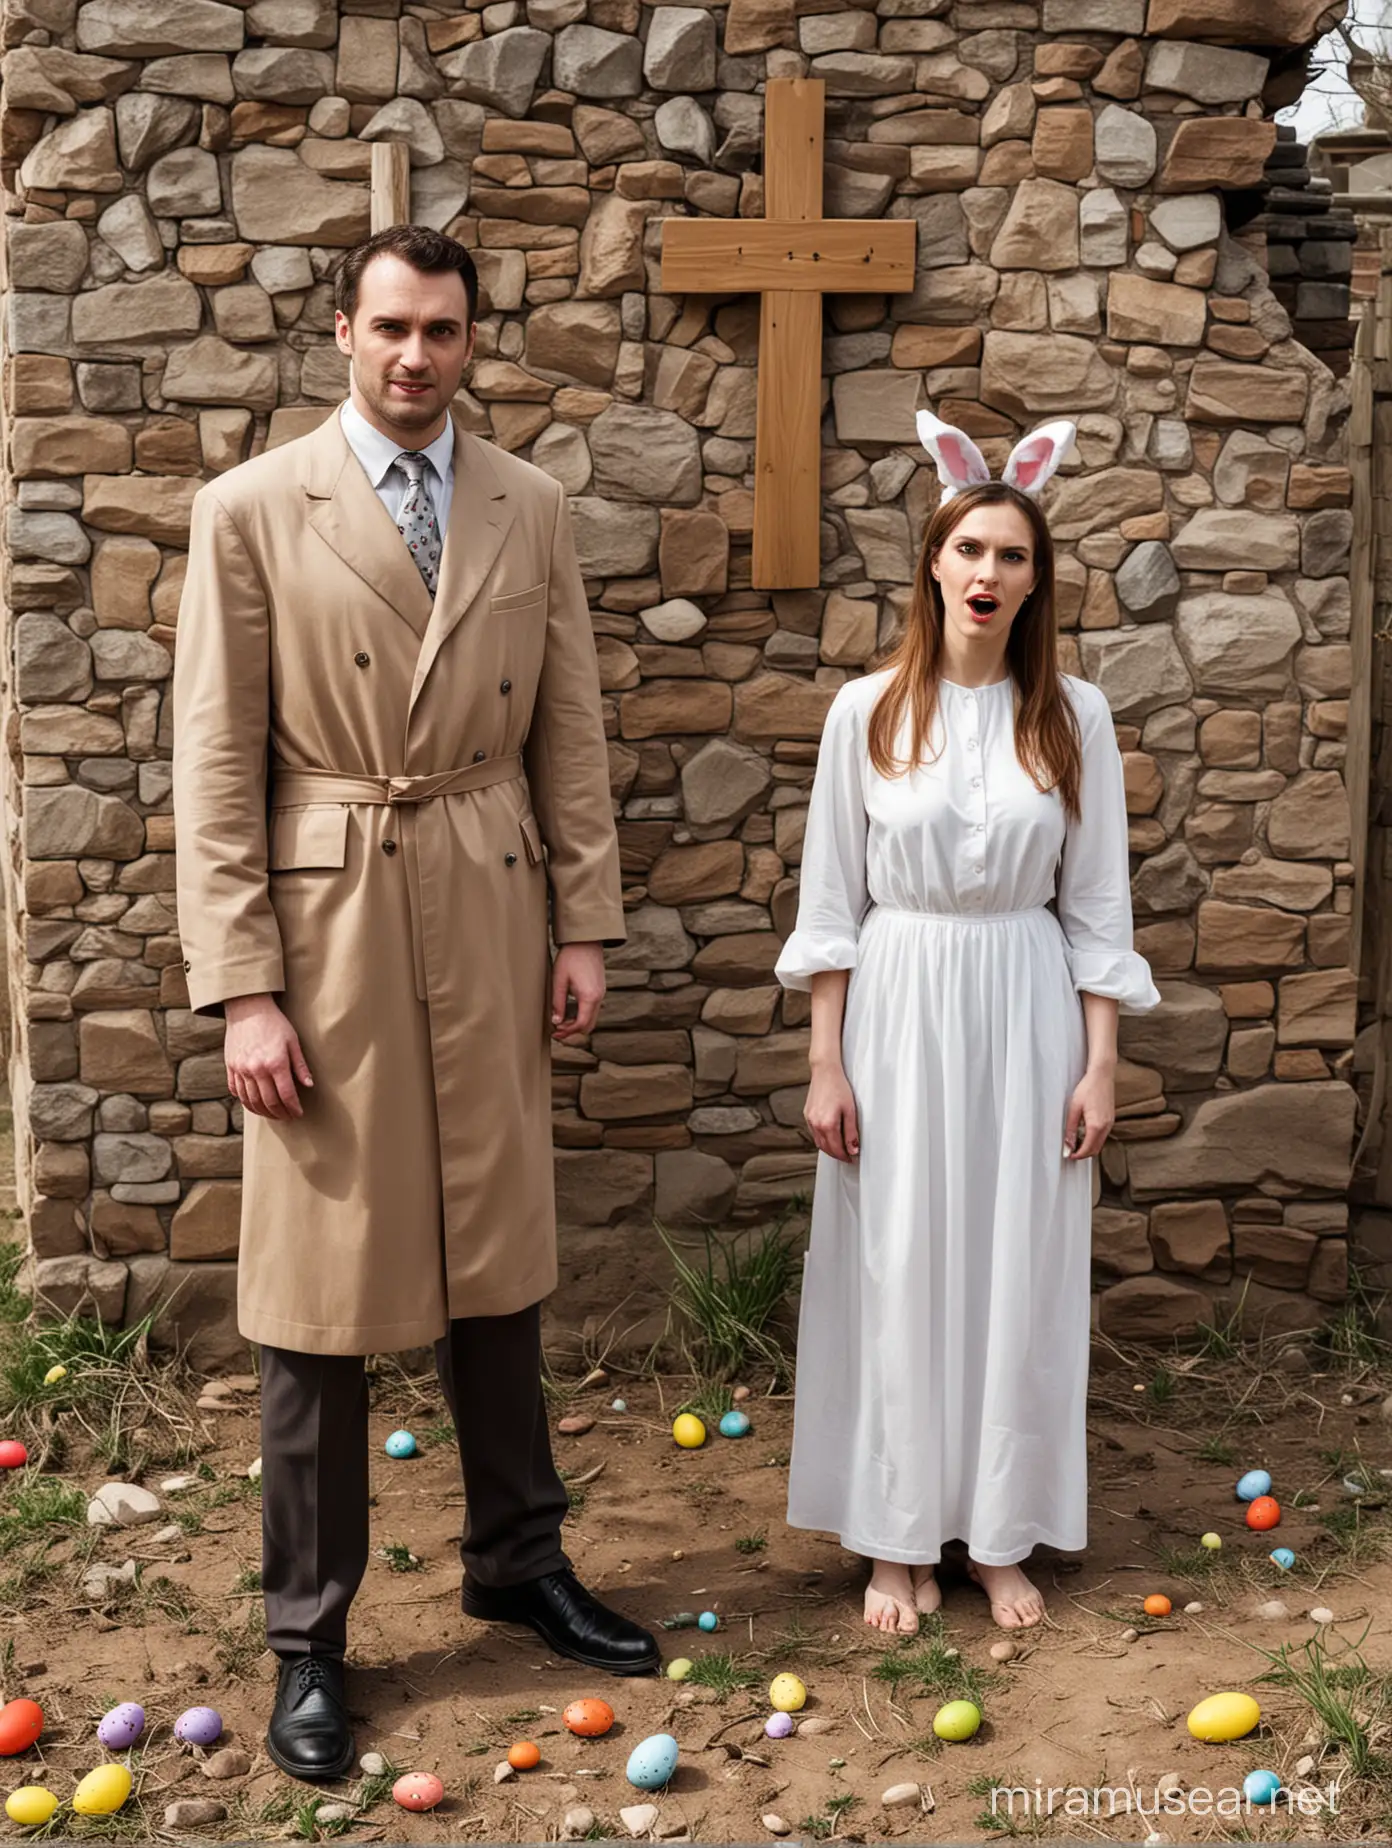 Mischievous Couple Disrupts Easter Celebration